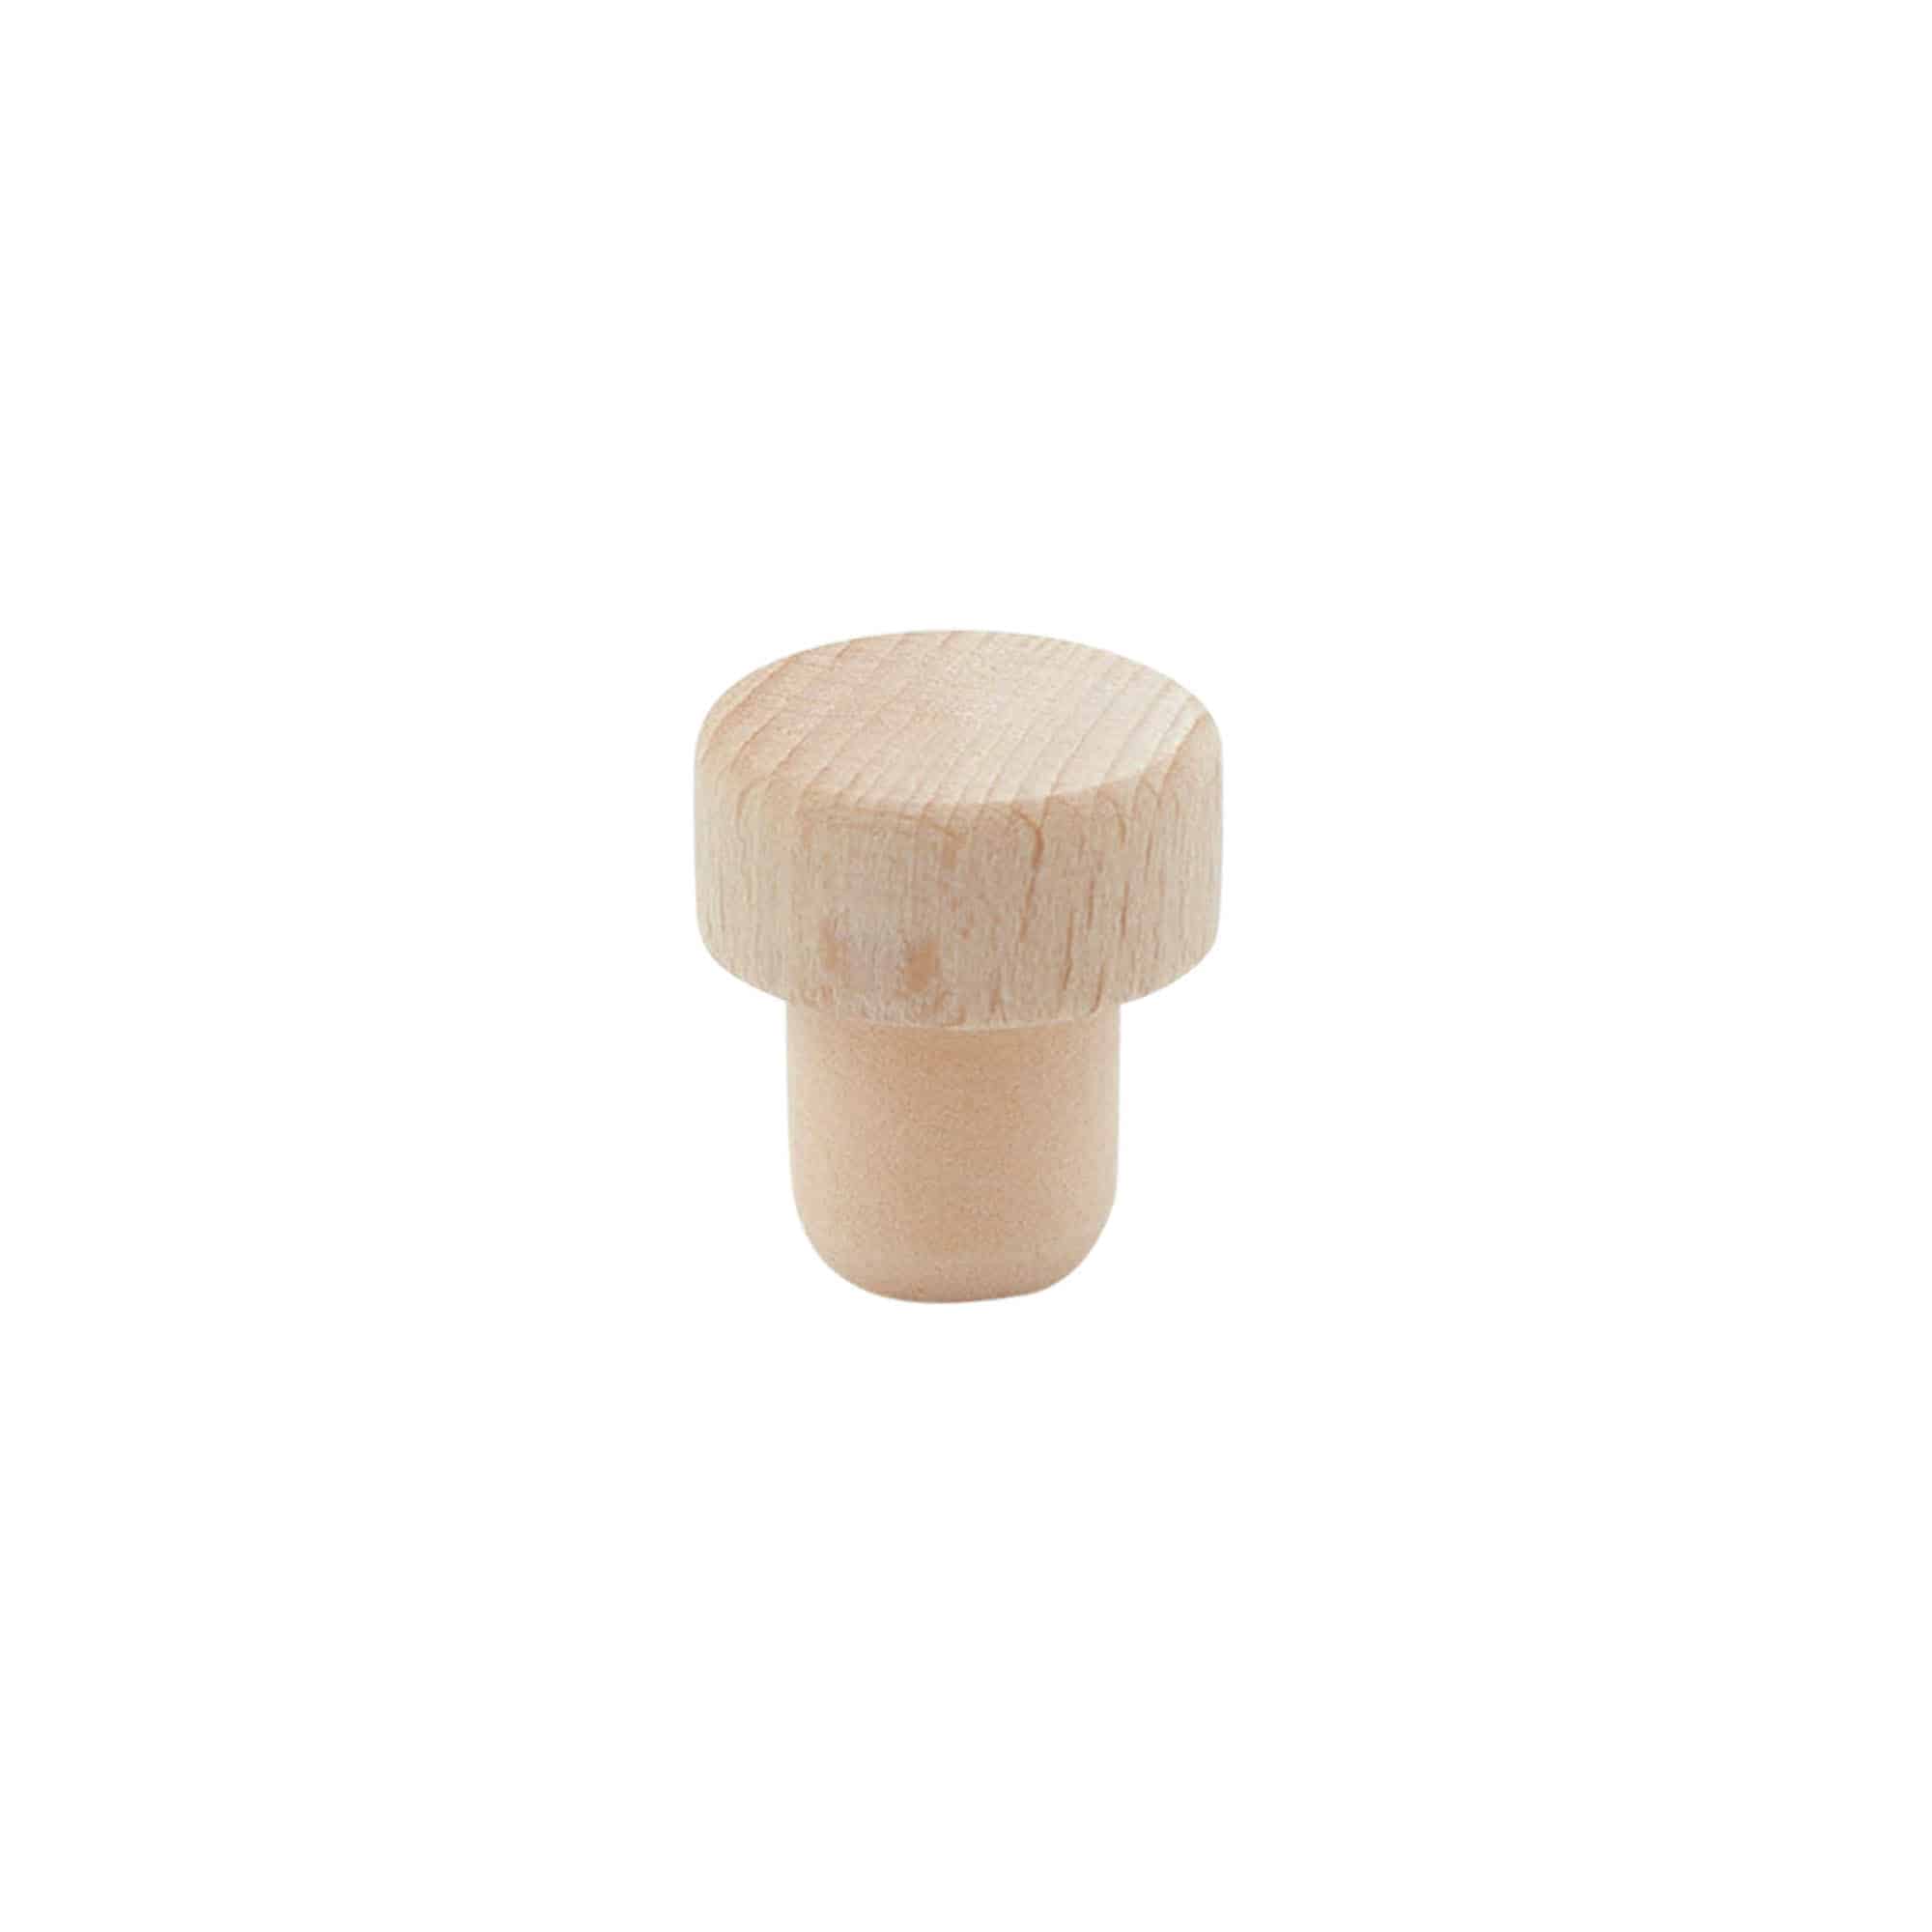 14 mm mushroom cork, wood, for opening: cork